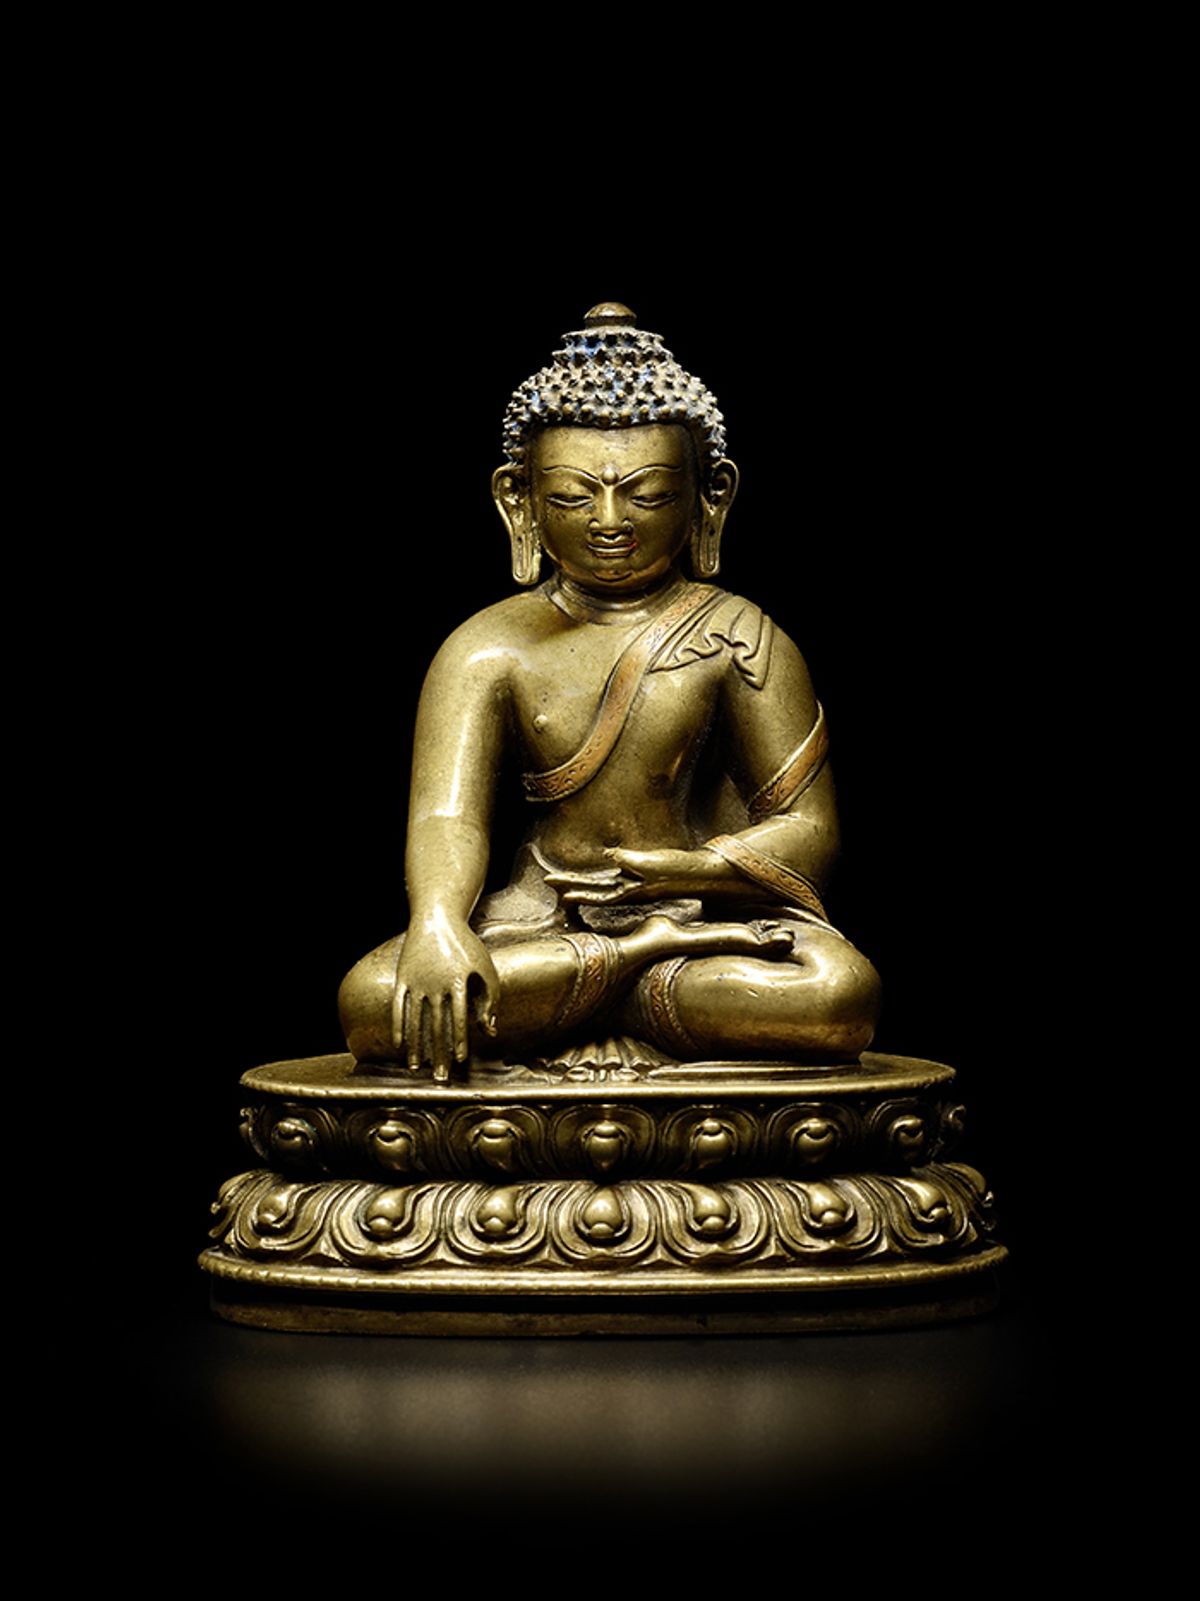 A copper inlaid brass alloy figure of Buddha Bonhams